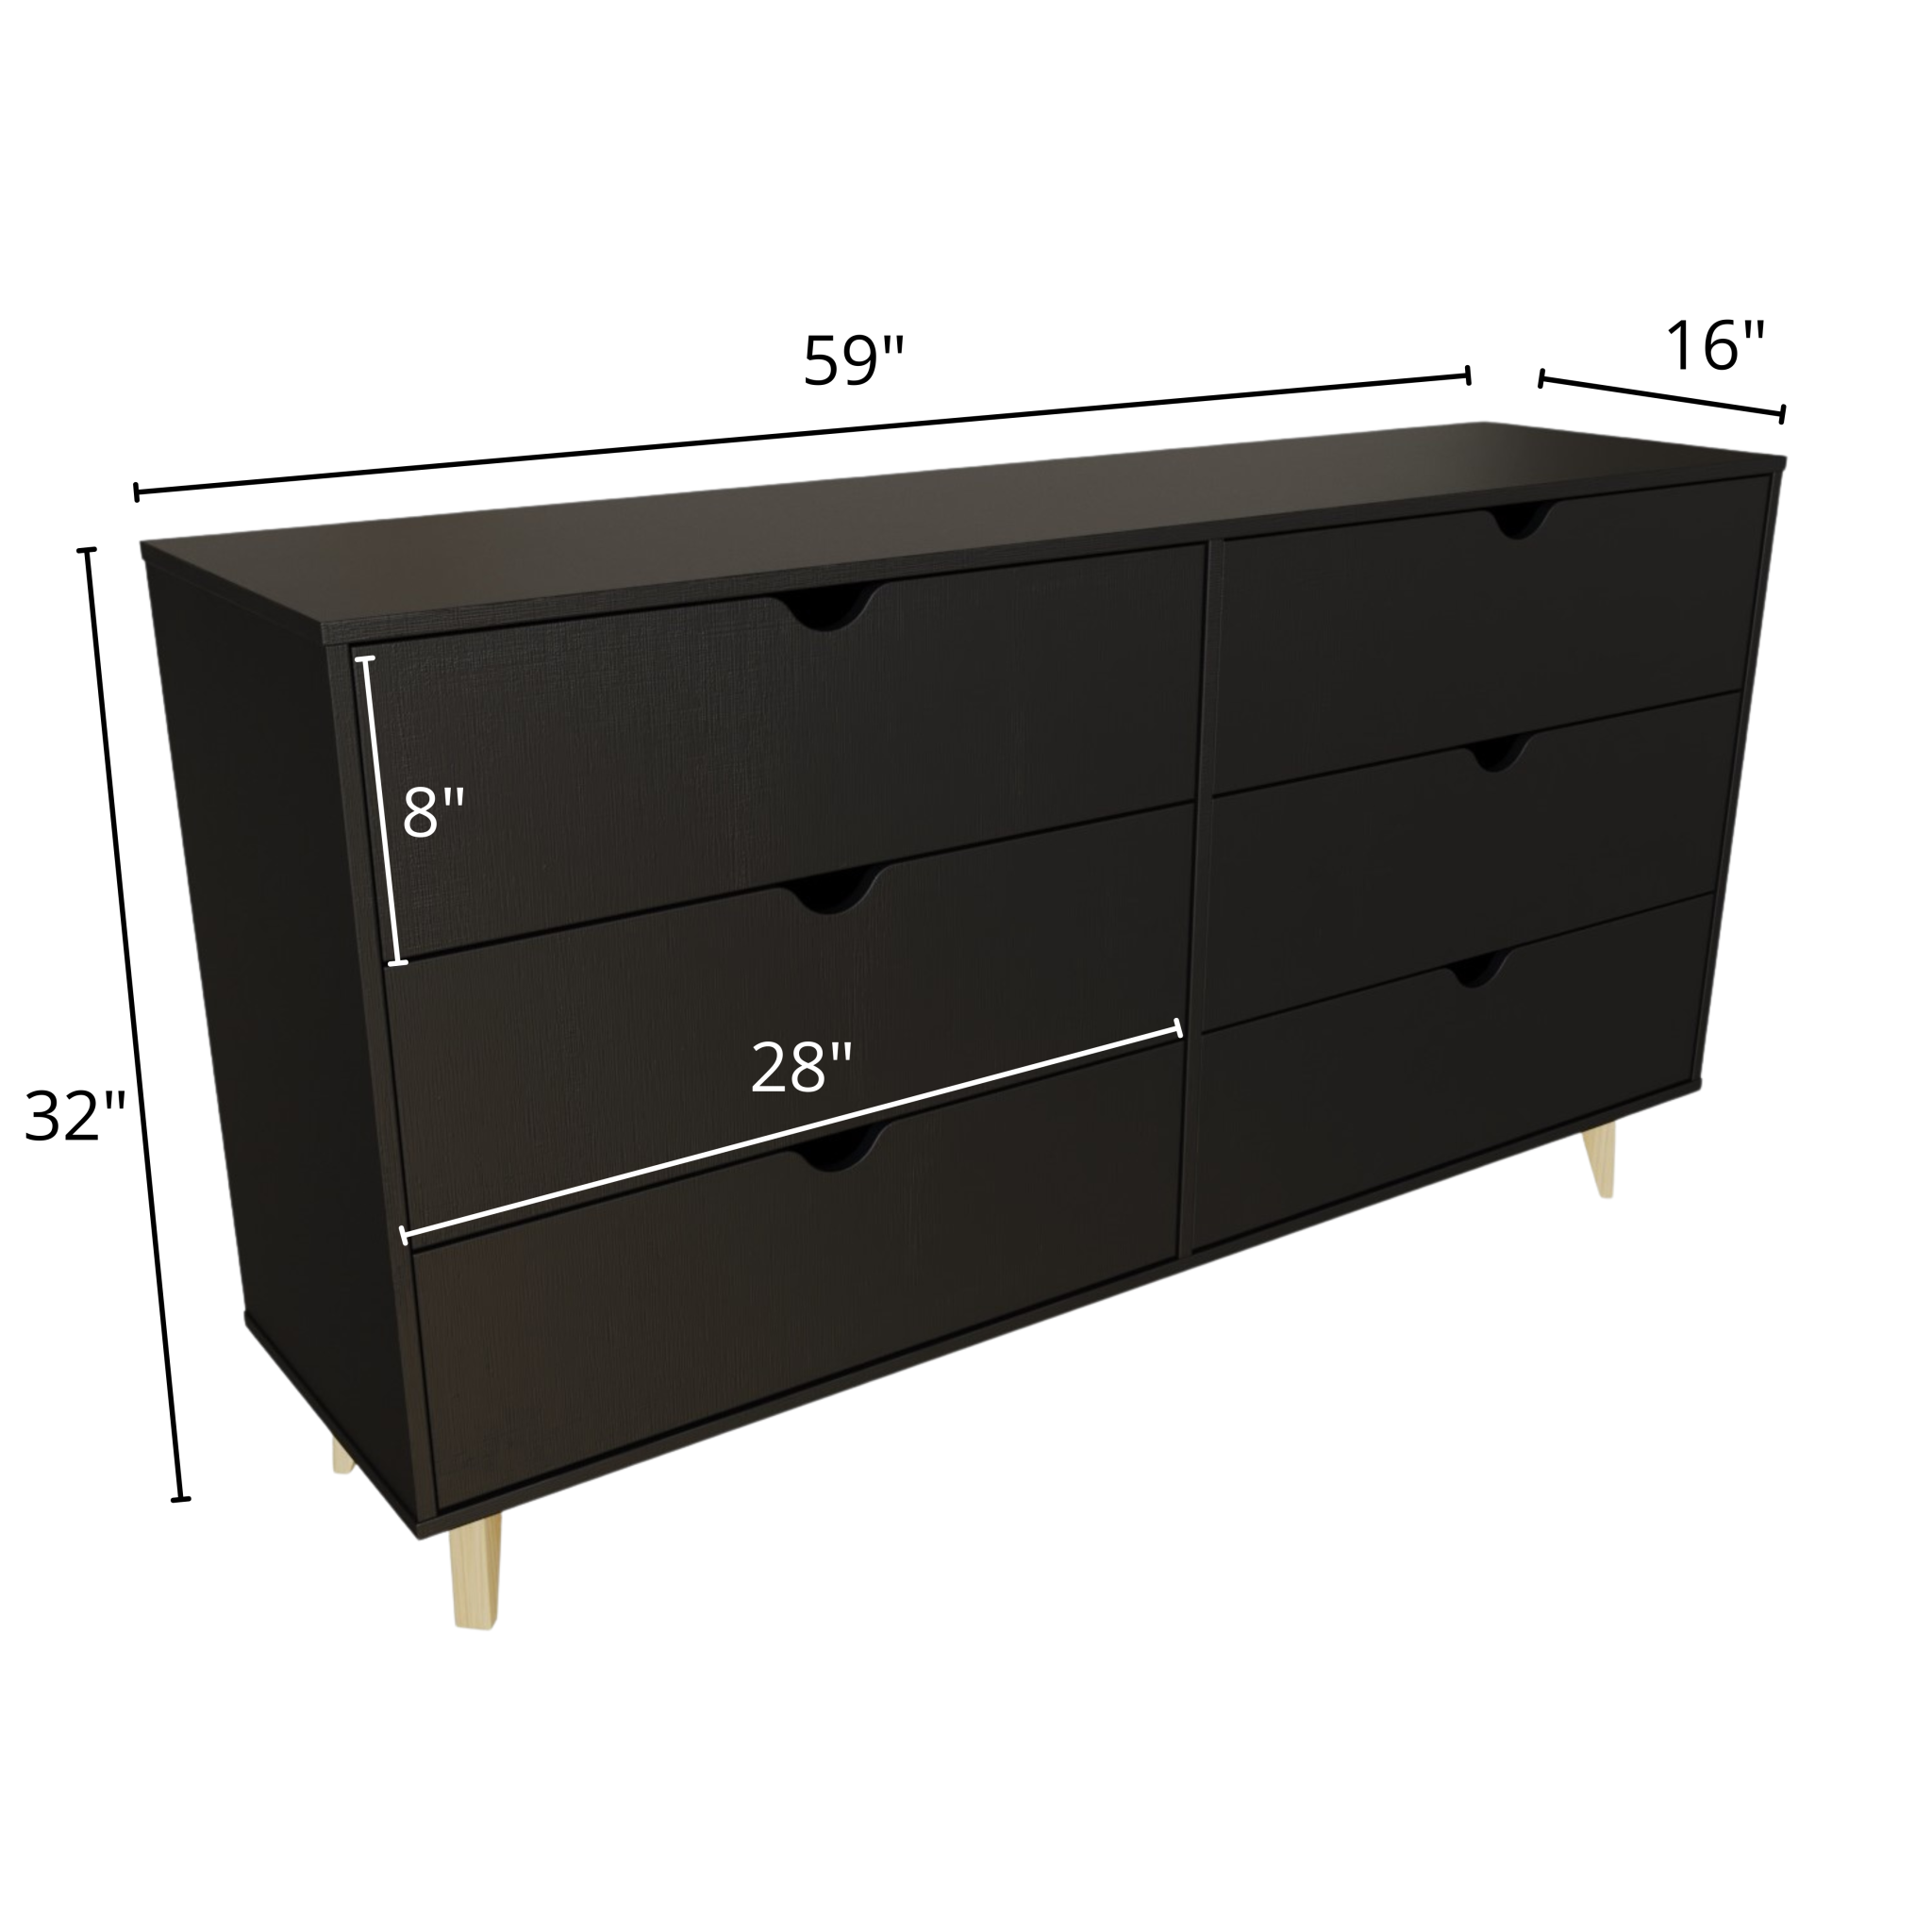 59" Black Scoop Handle Six Drawer Double Dresser